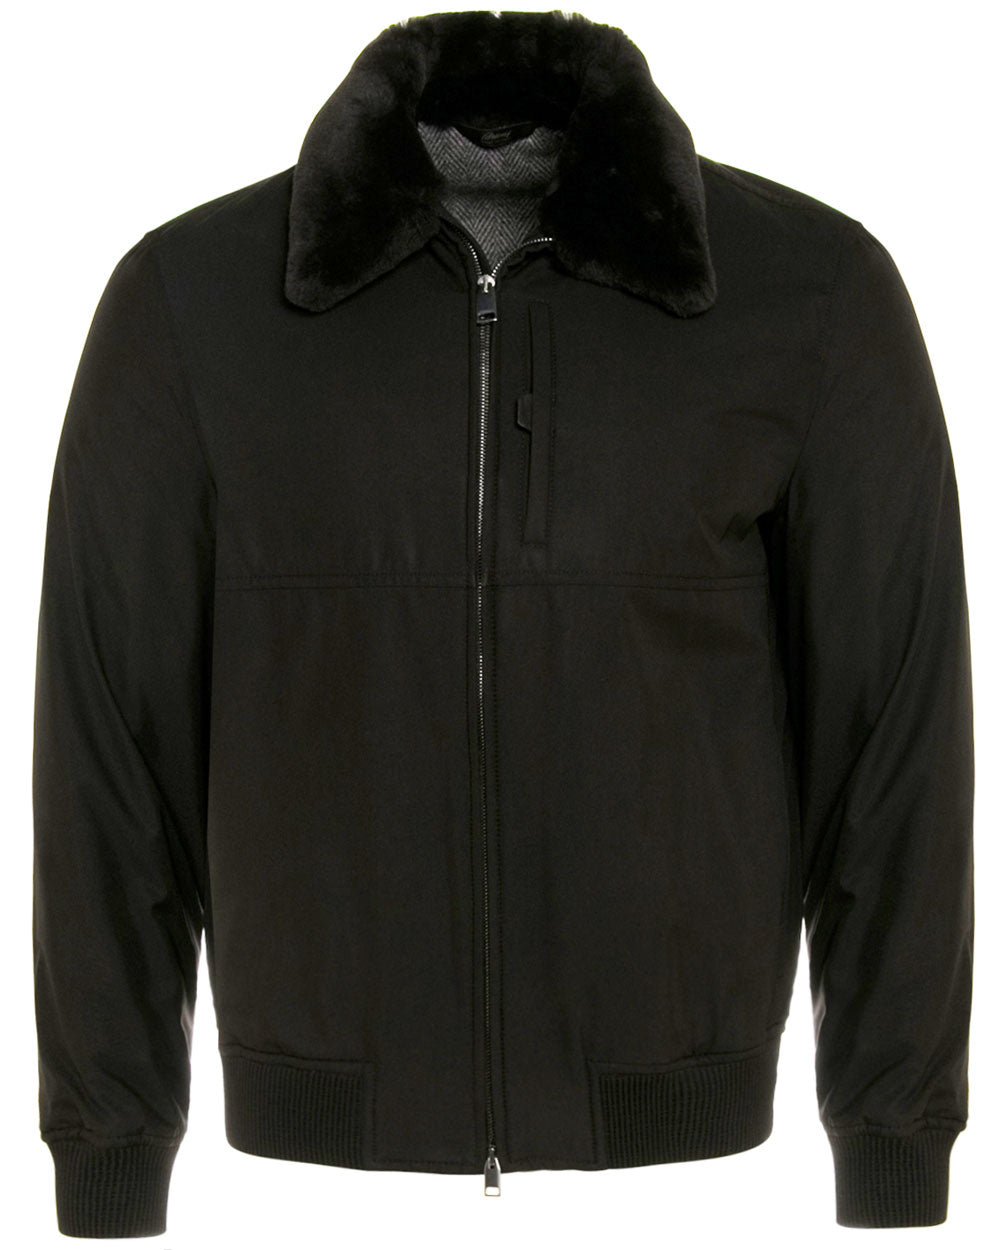 Black Performance Silk Jacket